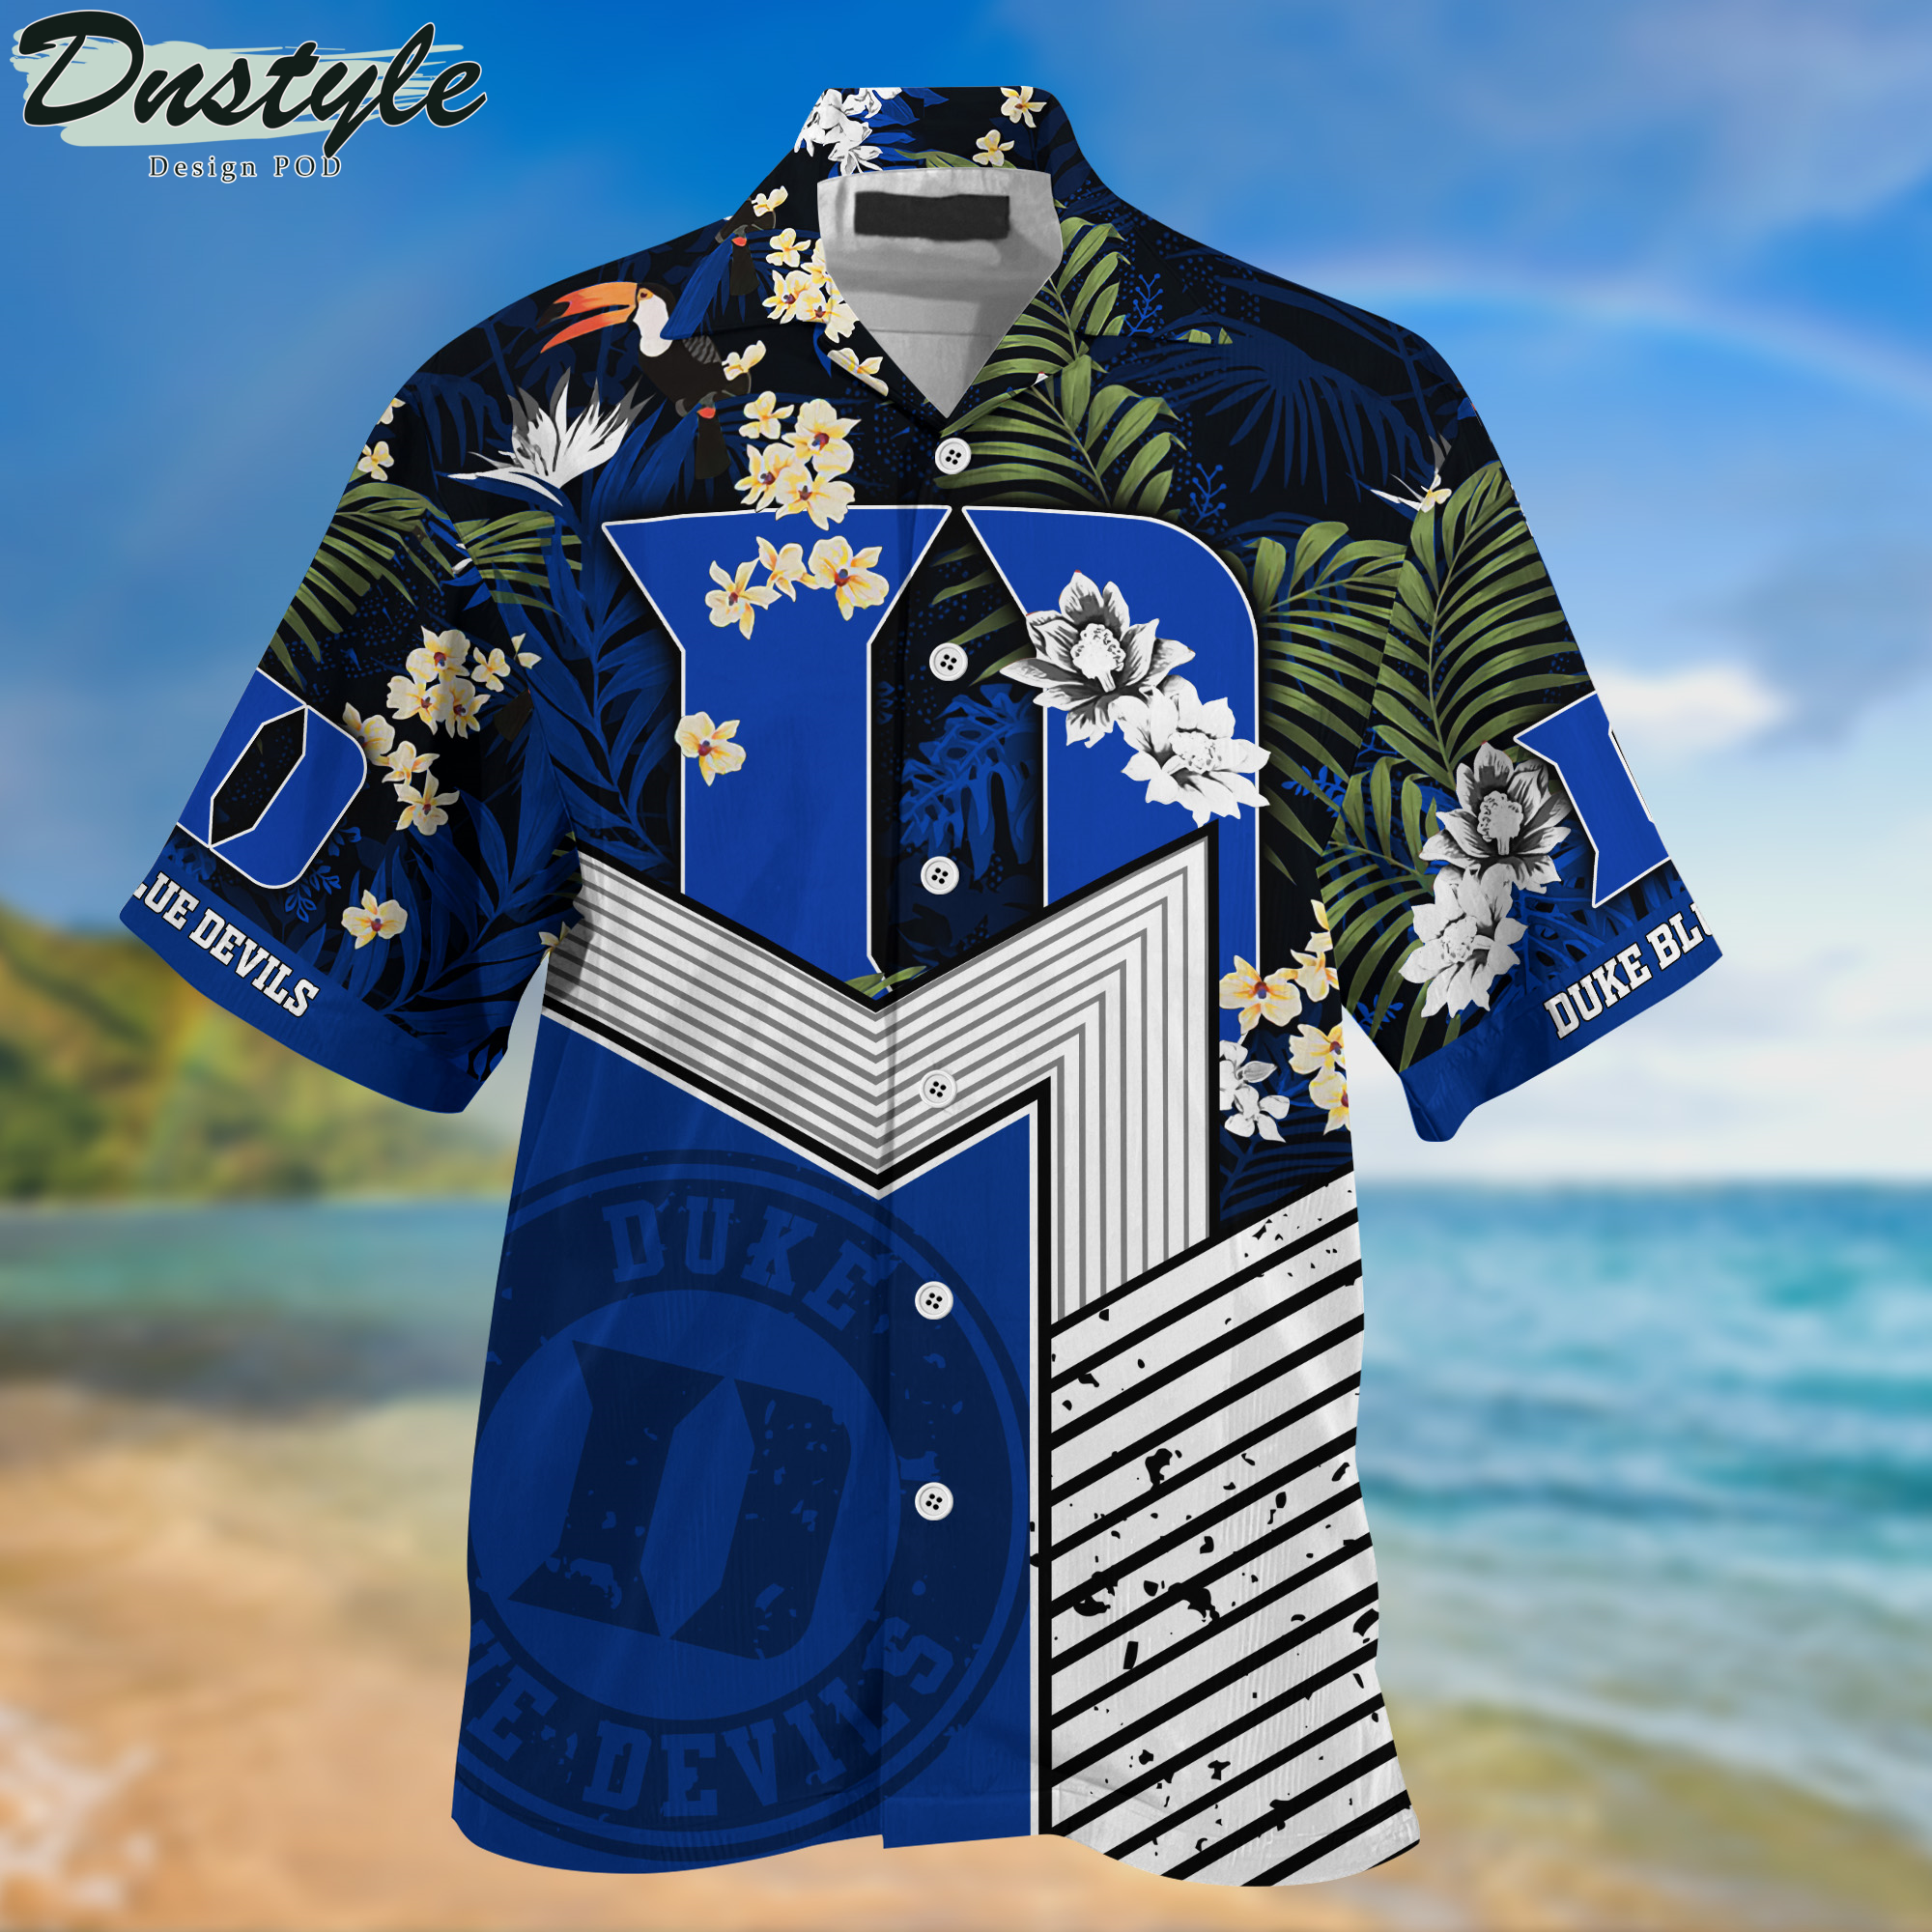 Duke Blue Devils Hawaii Shirt And Shorts New Collection